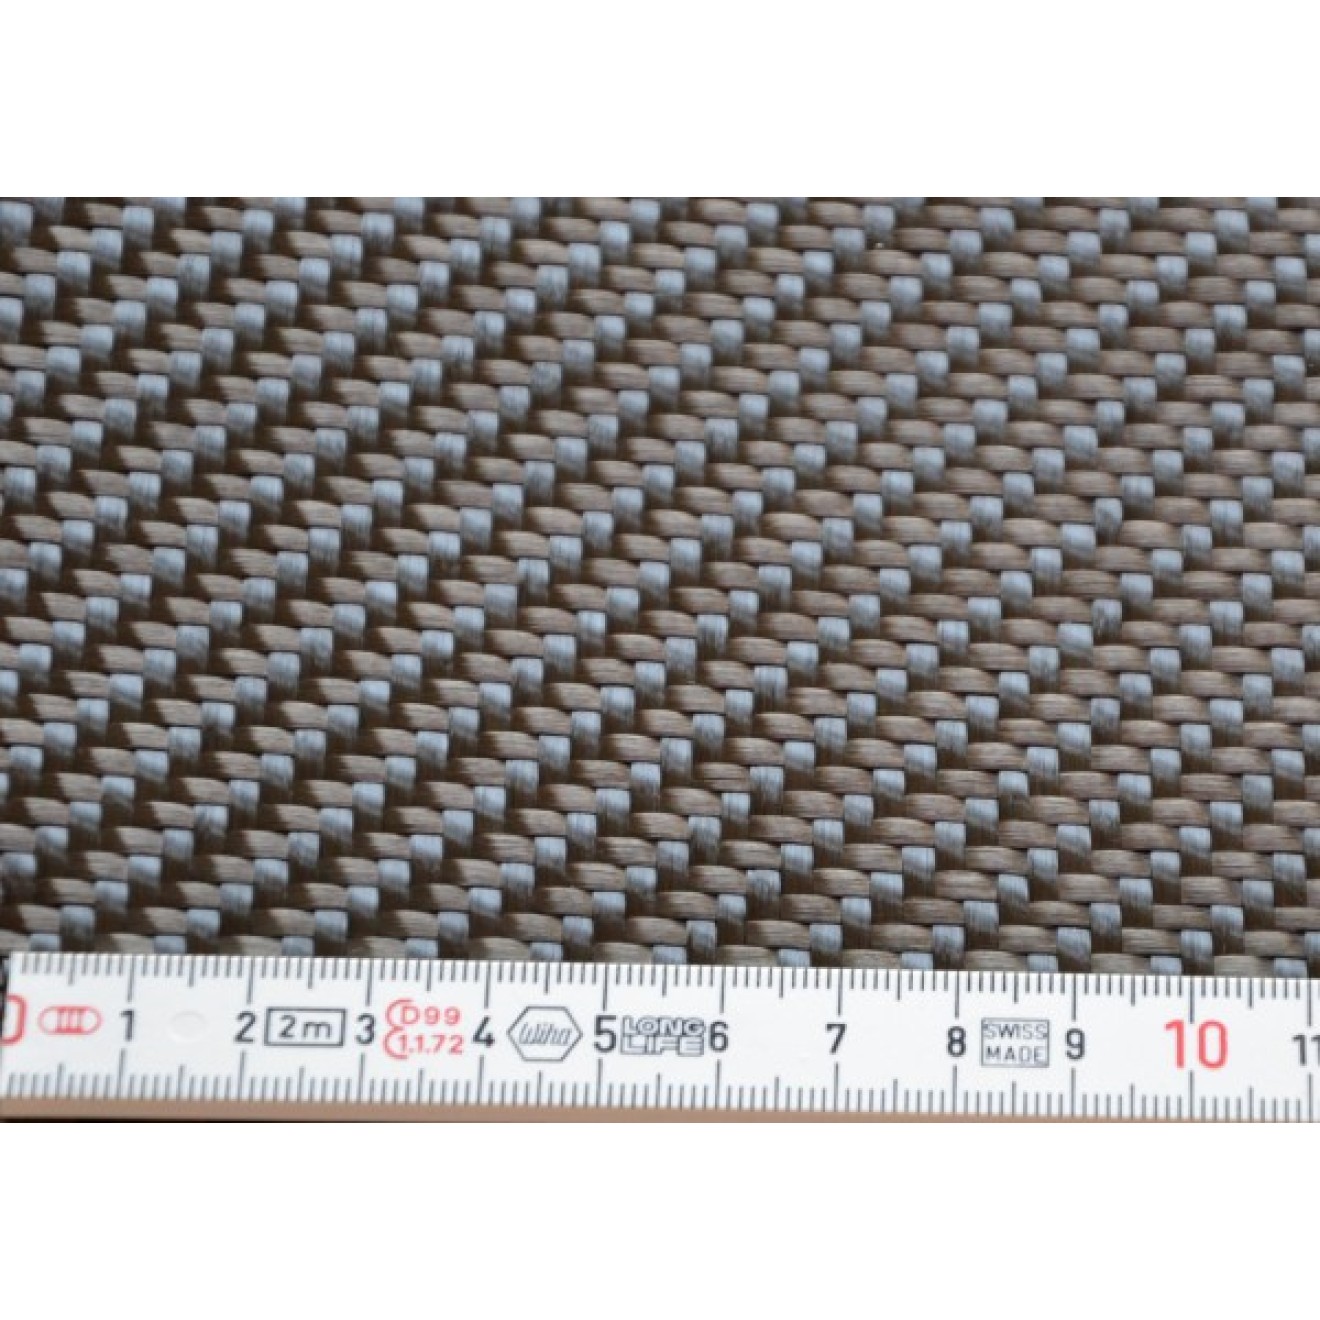 Woven carbon fiber fabric 12K 600g/m², twill, width 127cm